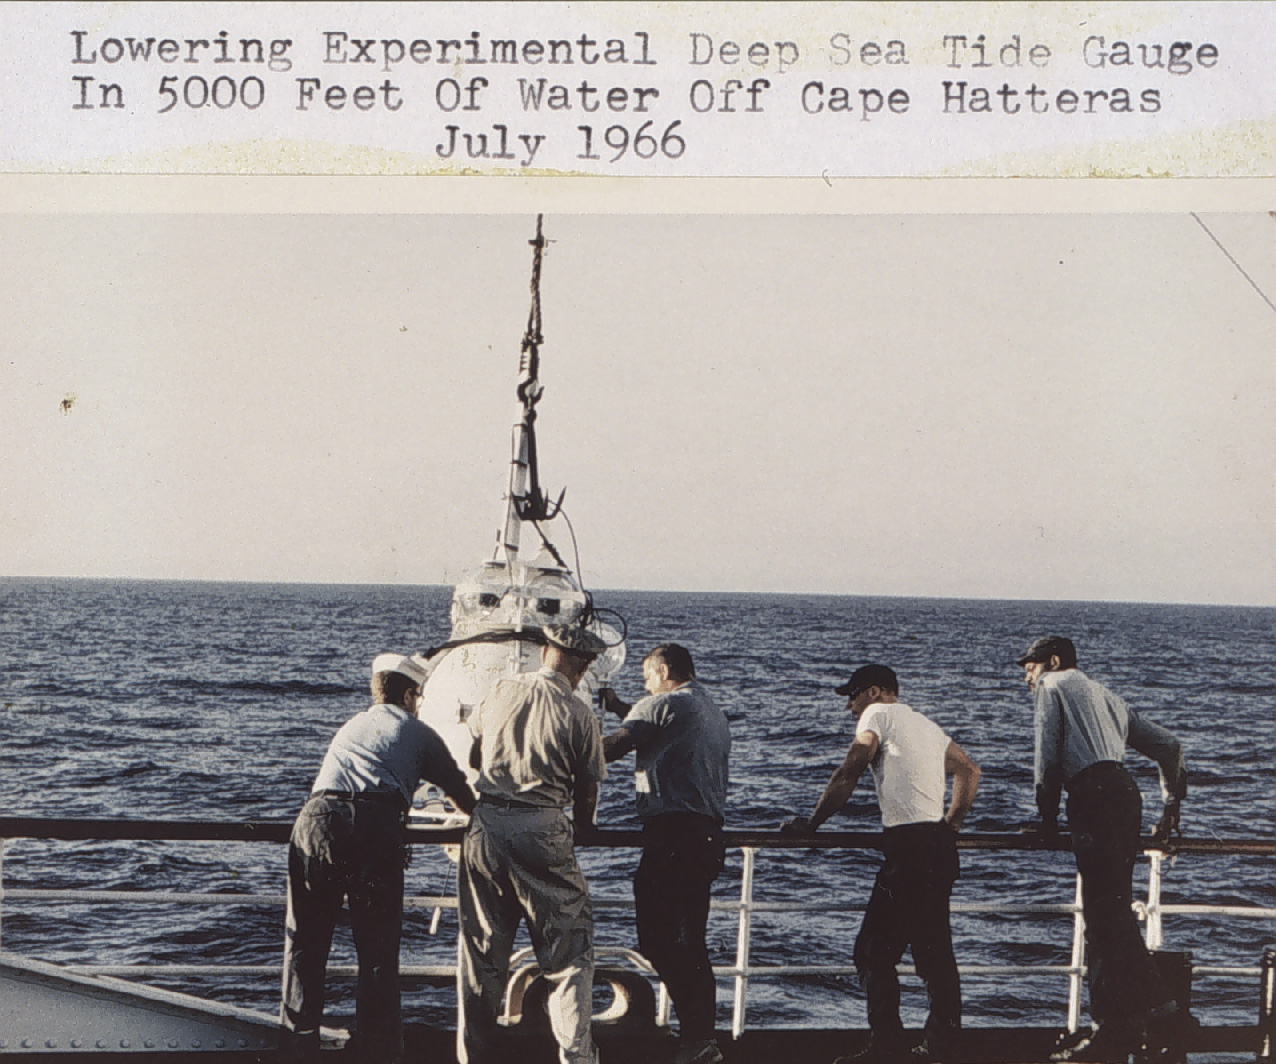 Deployment of experimental deepsea tide gauge